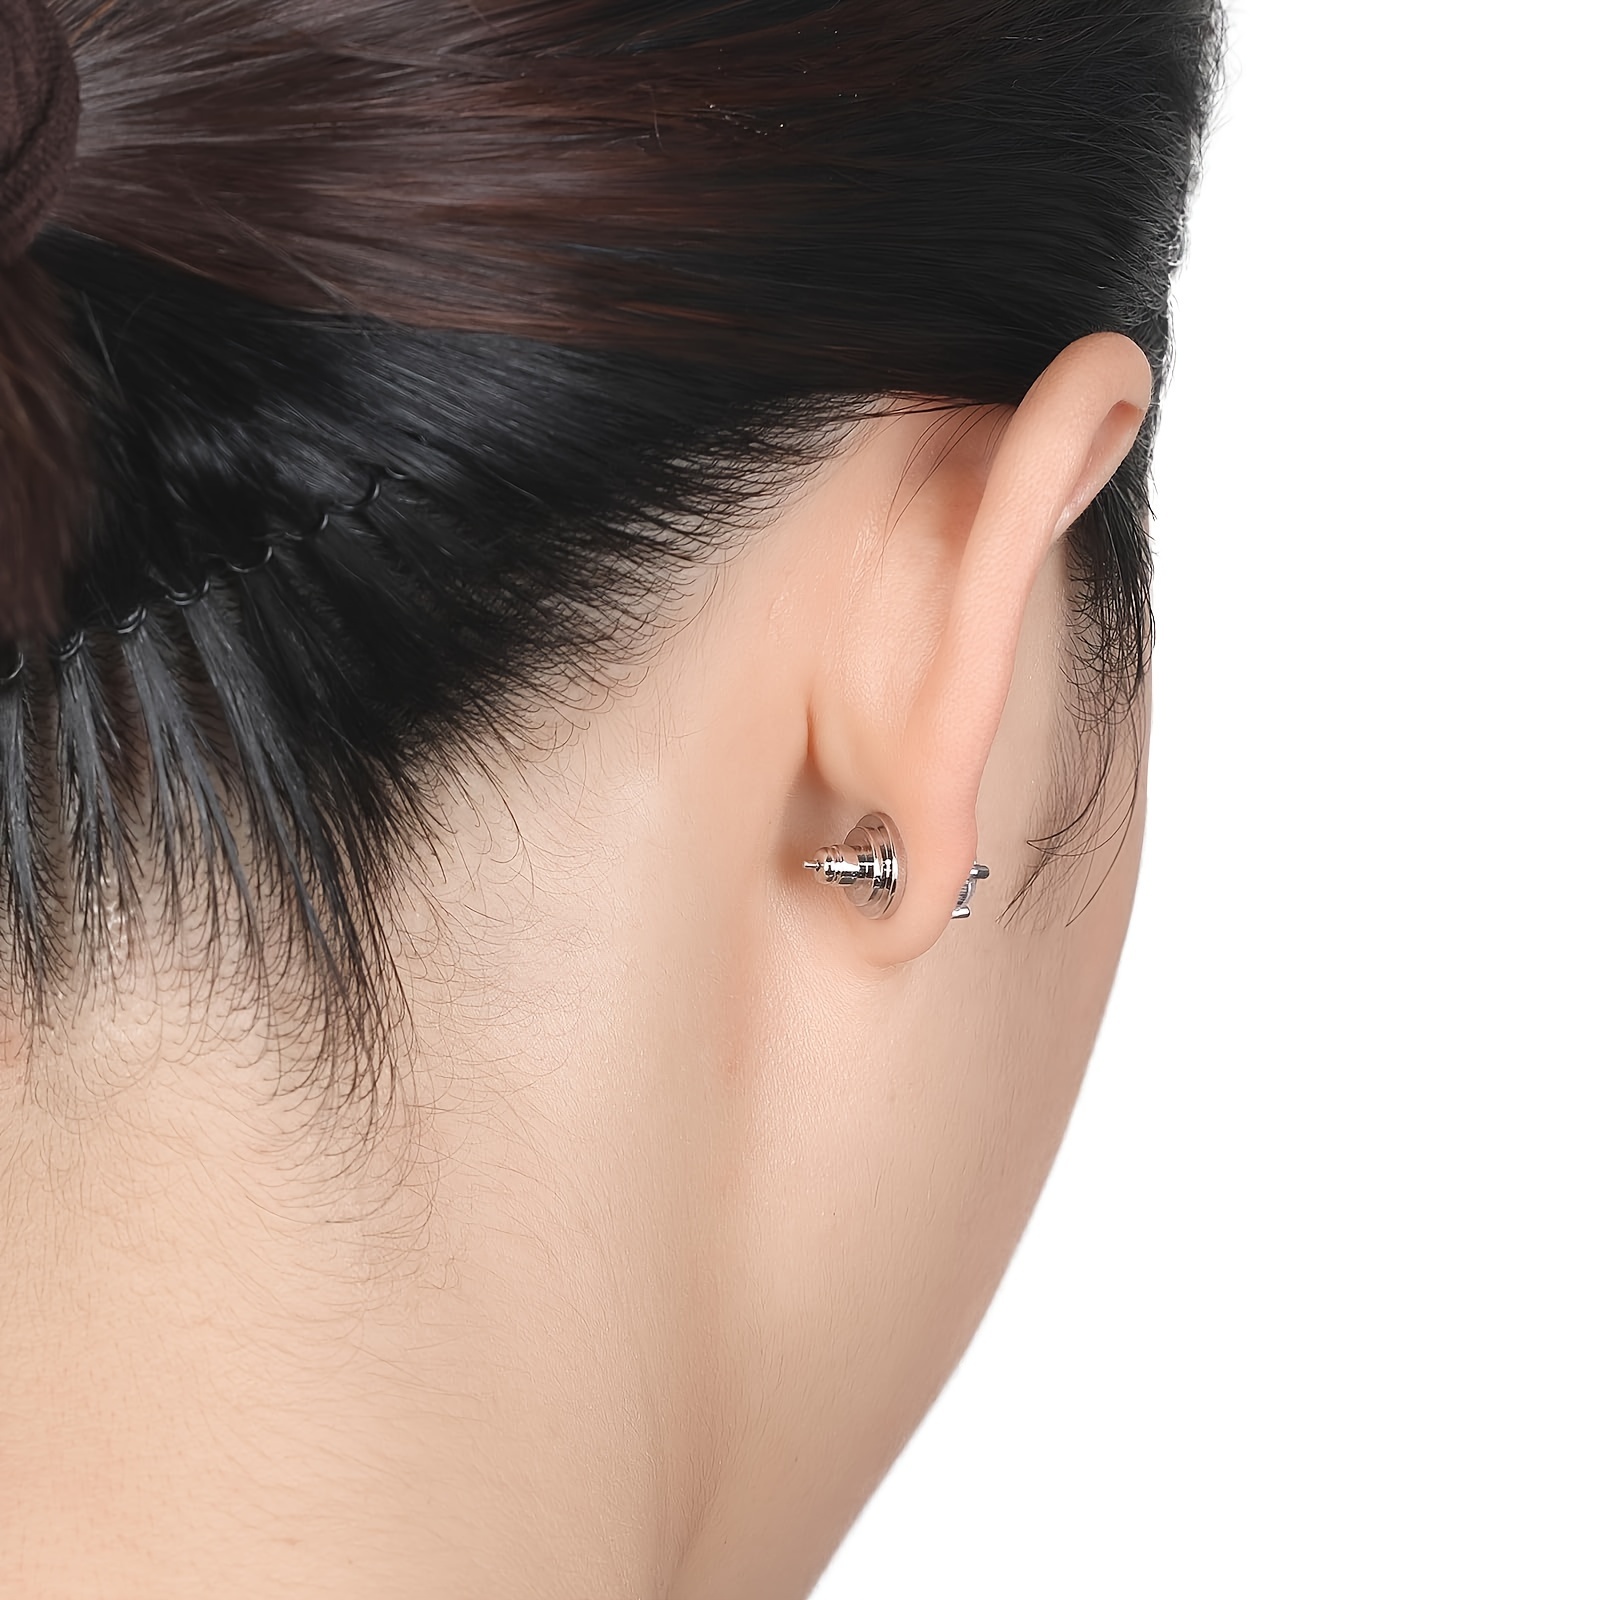 8 Pieces Earring Backs for Droopy Ears Large Earring Kenya